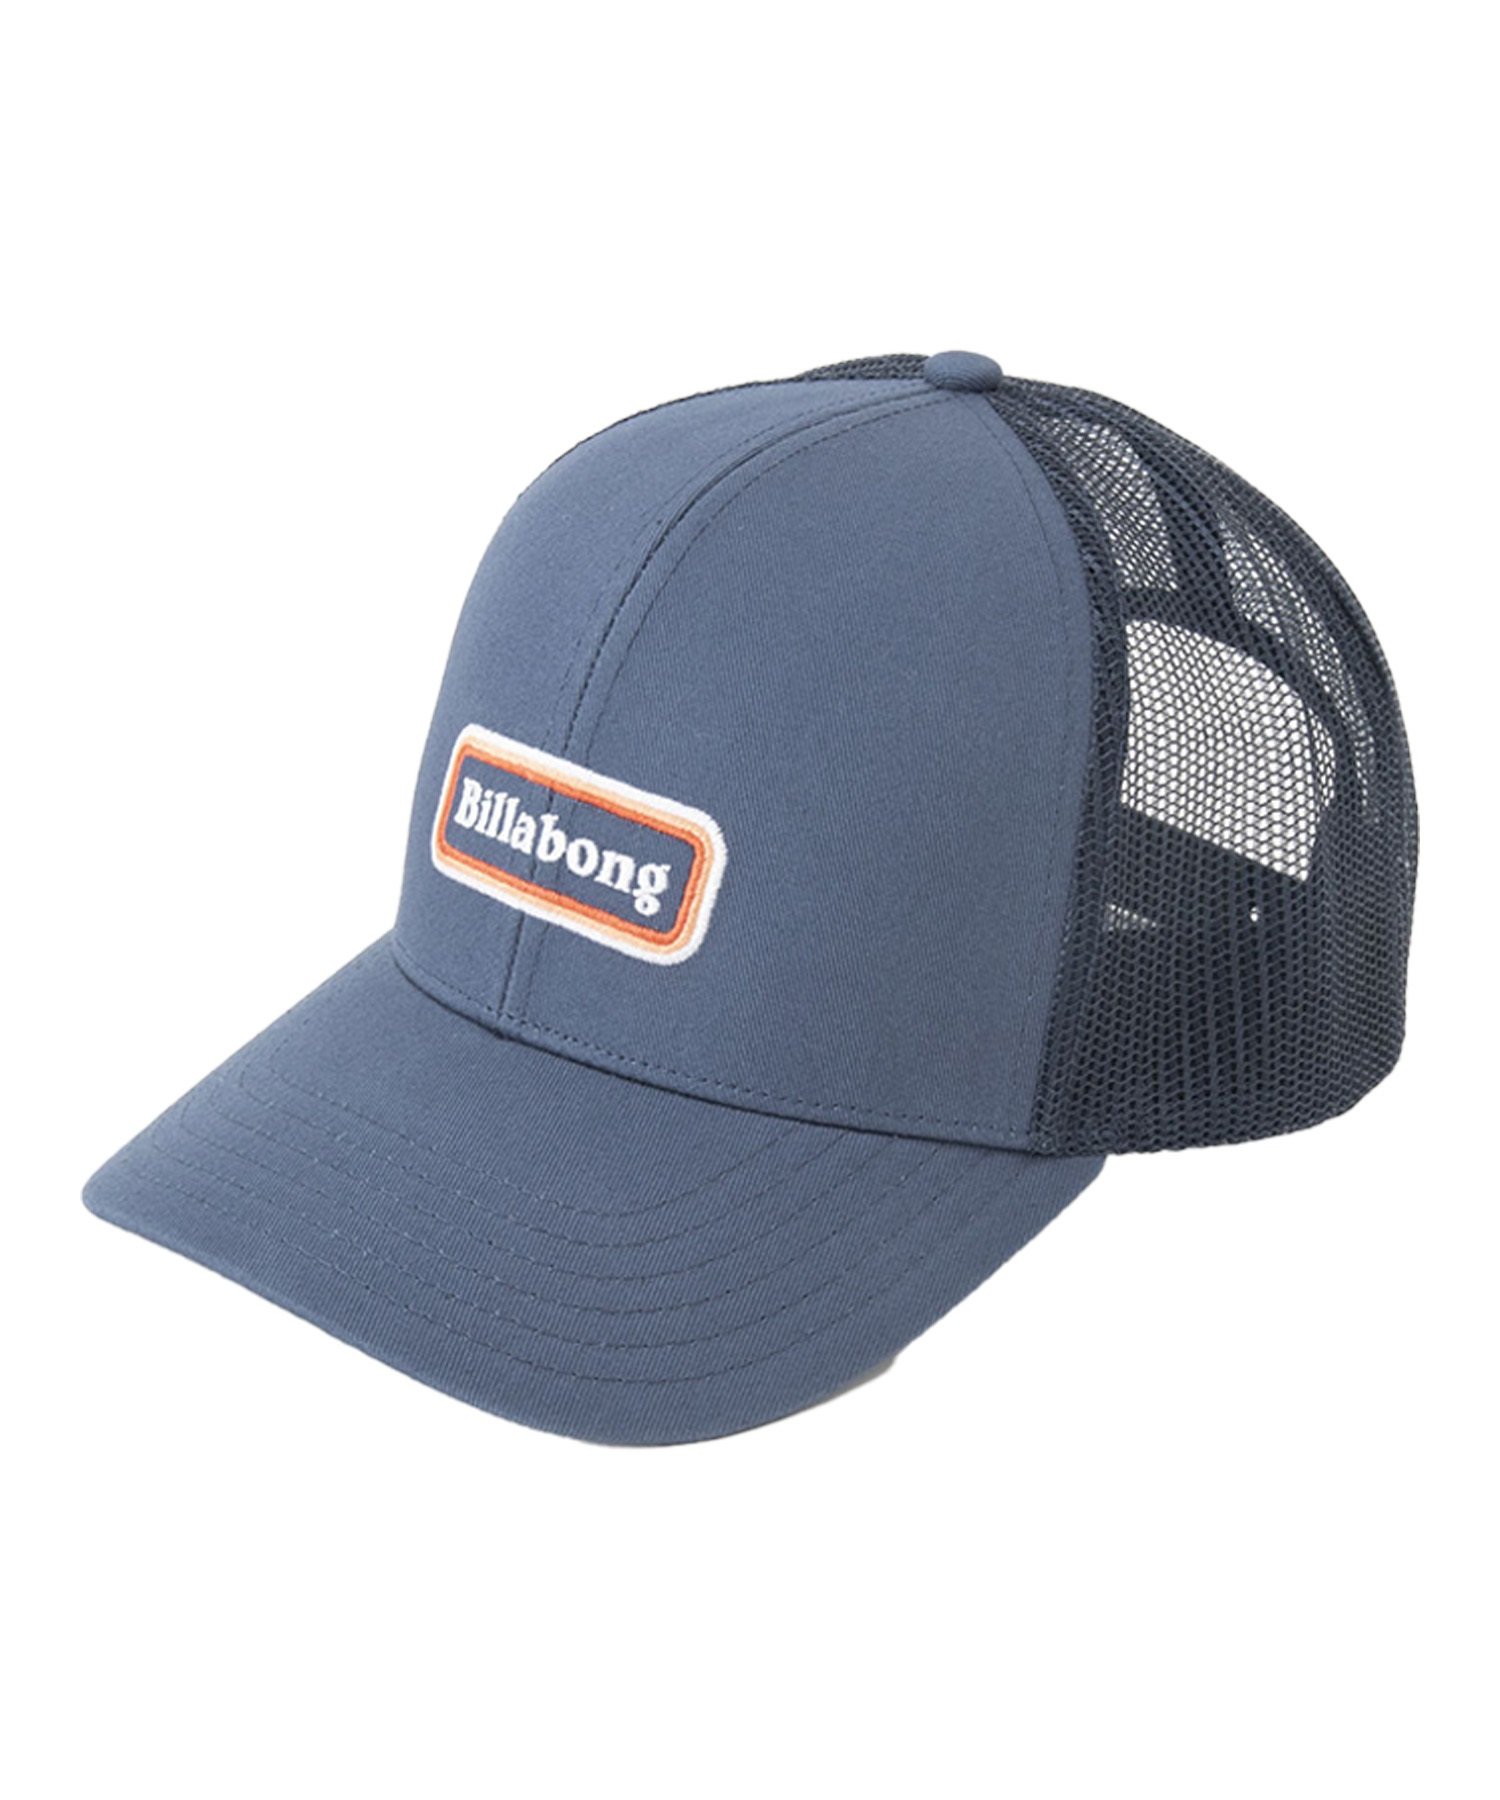 BILLABONG/ビラボン WALLED TRUCKER キャップ 帽子 メッシュ フリーサイズ BE011-918(PHA-FREE)